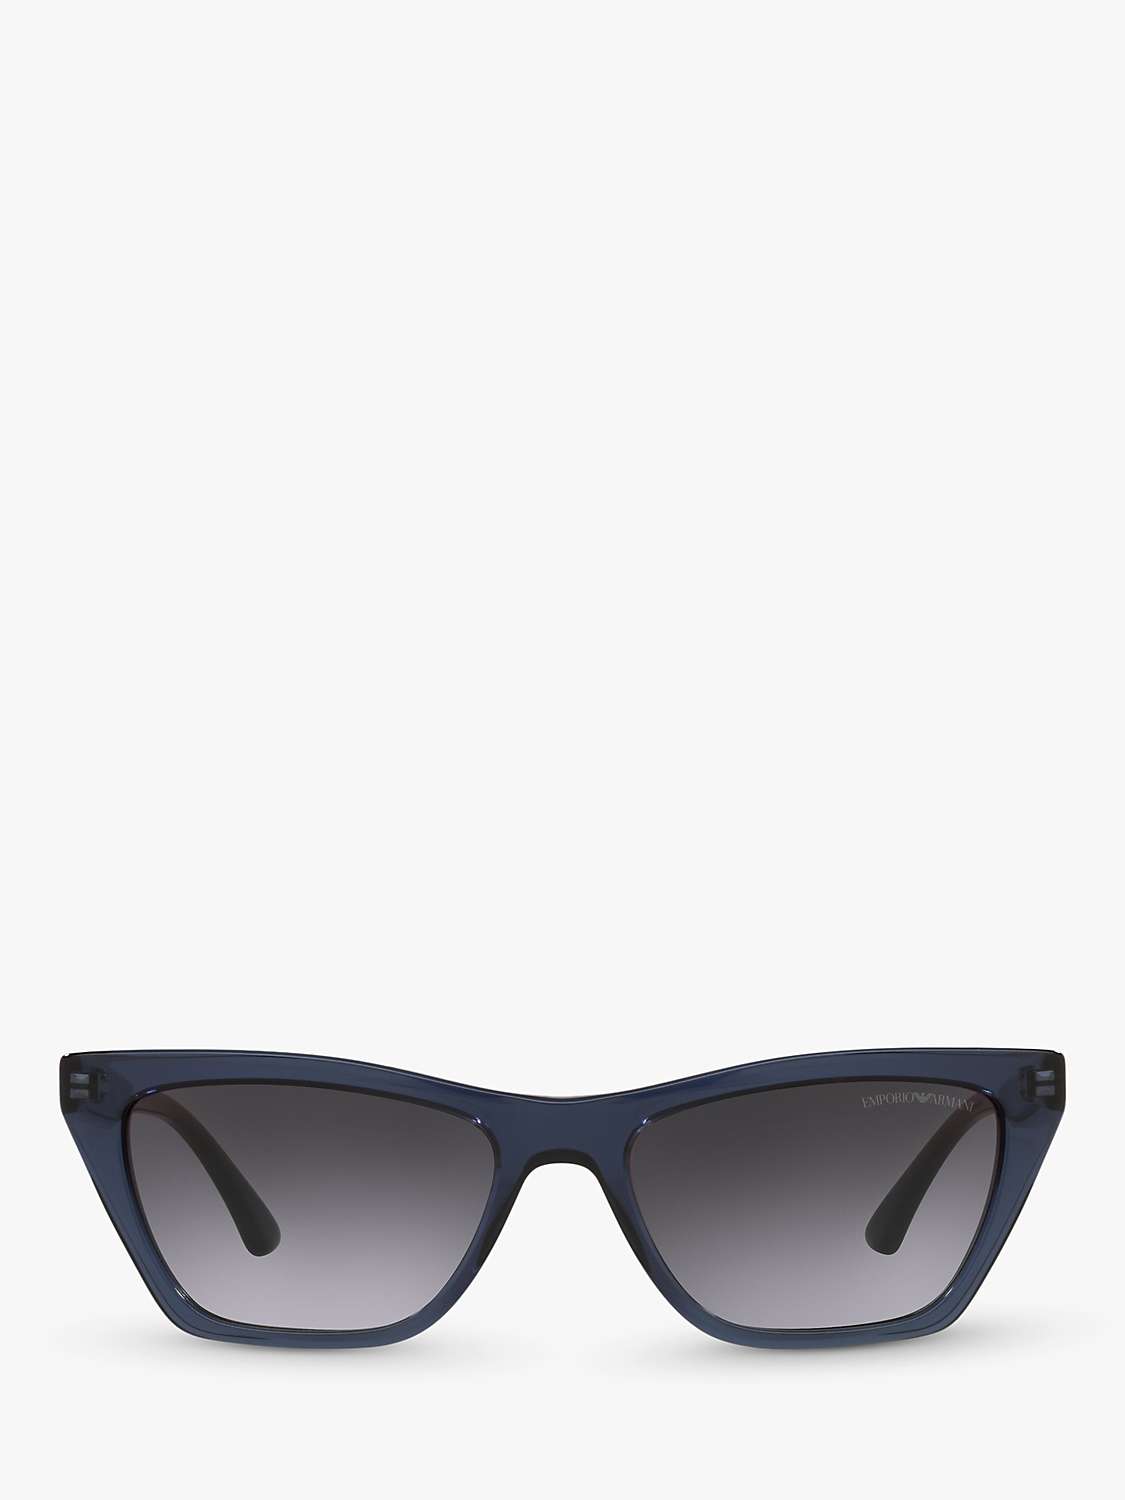 Buy Emporio Armani EA4169 Women's Cat's Eye Sunglasses Online at johnlewis.com